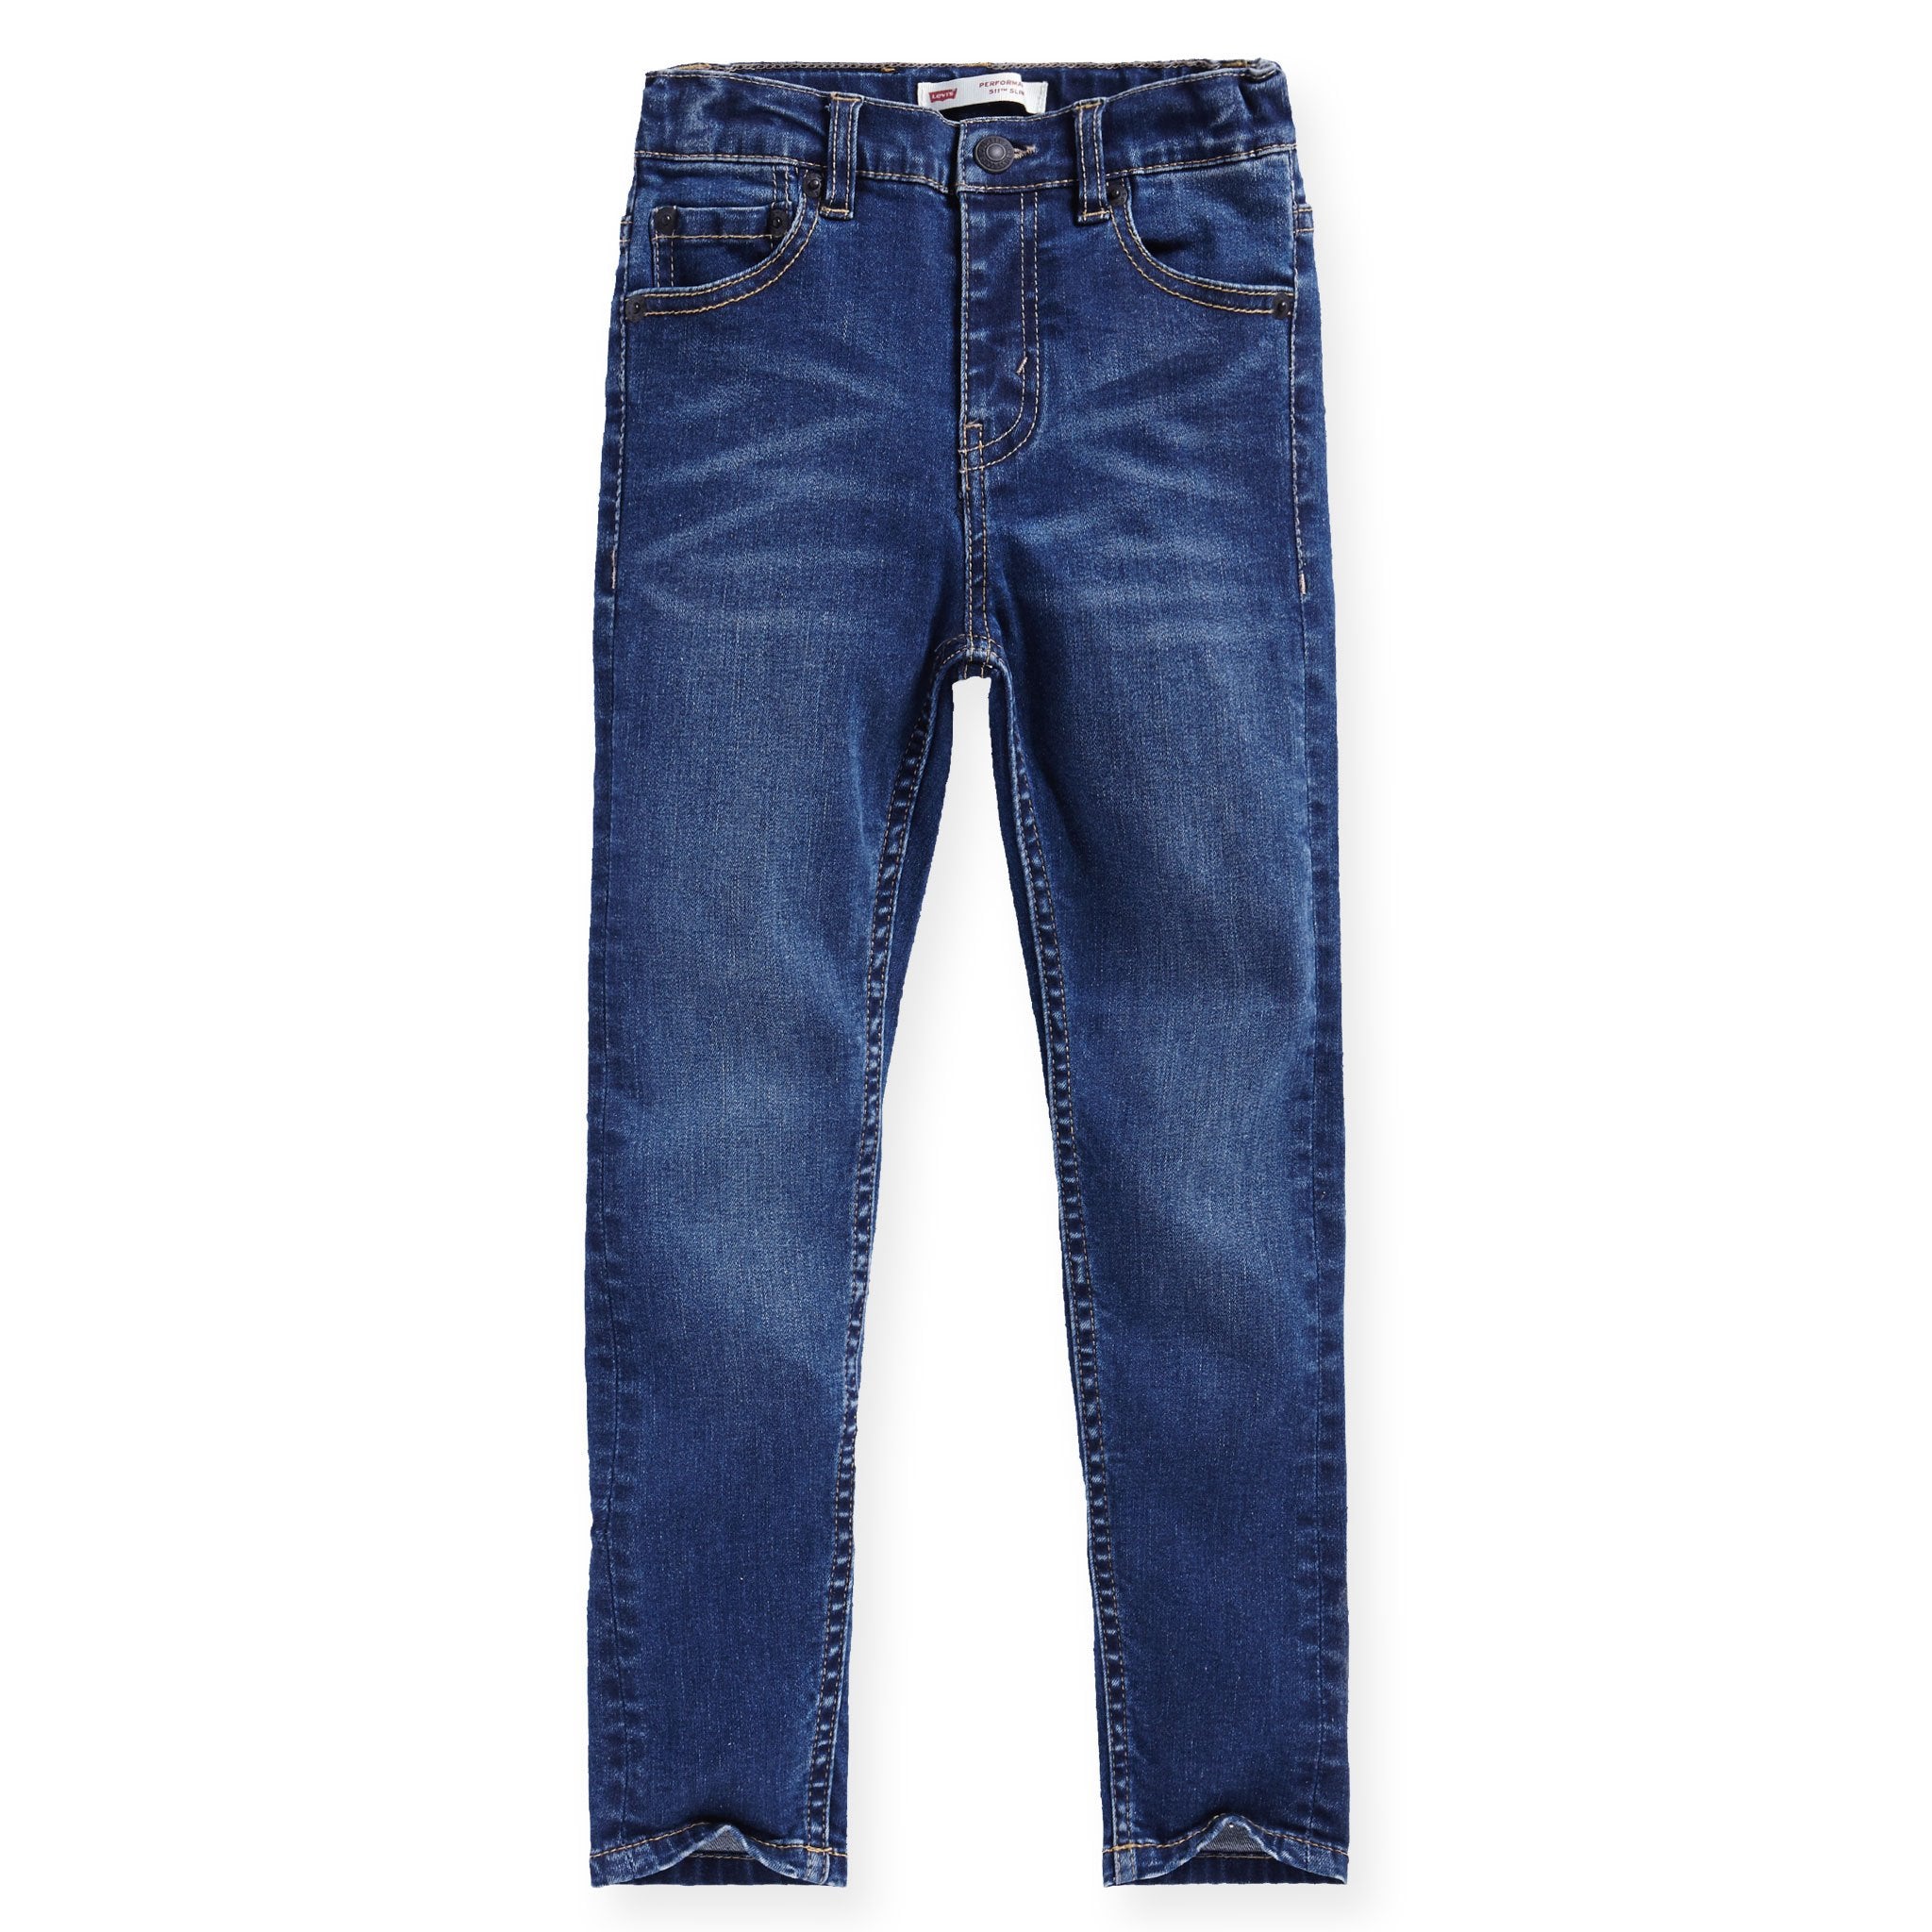 LEVI’S 519 男童超緊身牛仔褲 LEVI’S 519 Boys’ Skinny Jeans